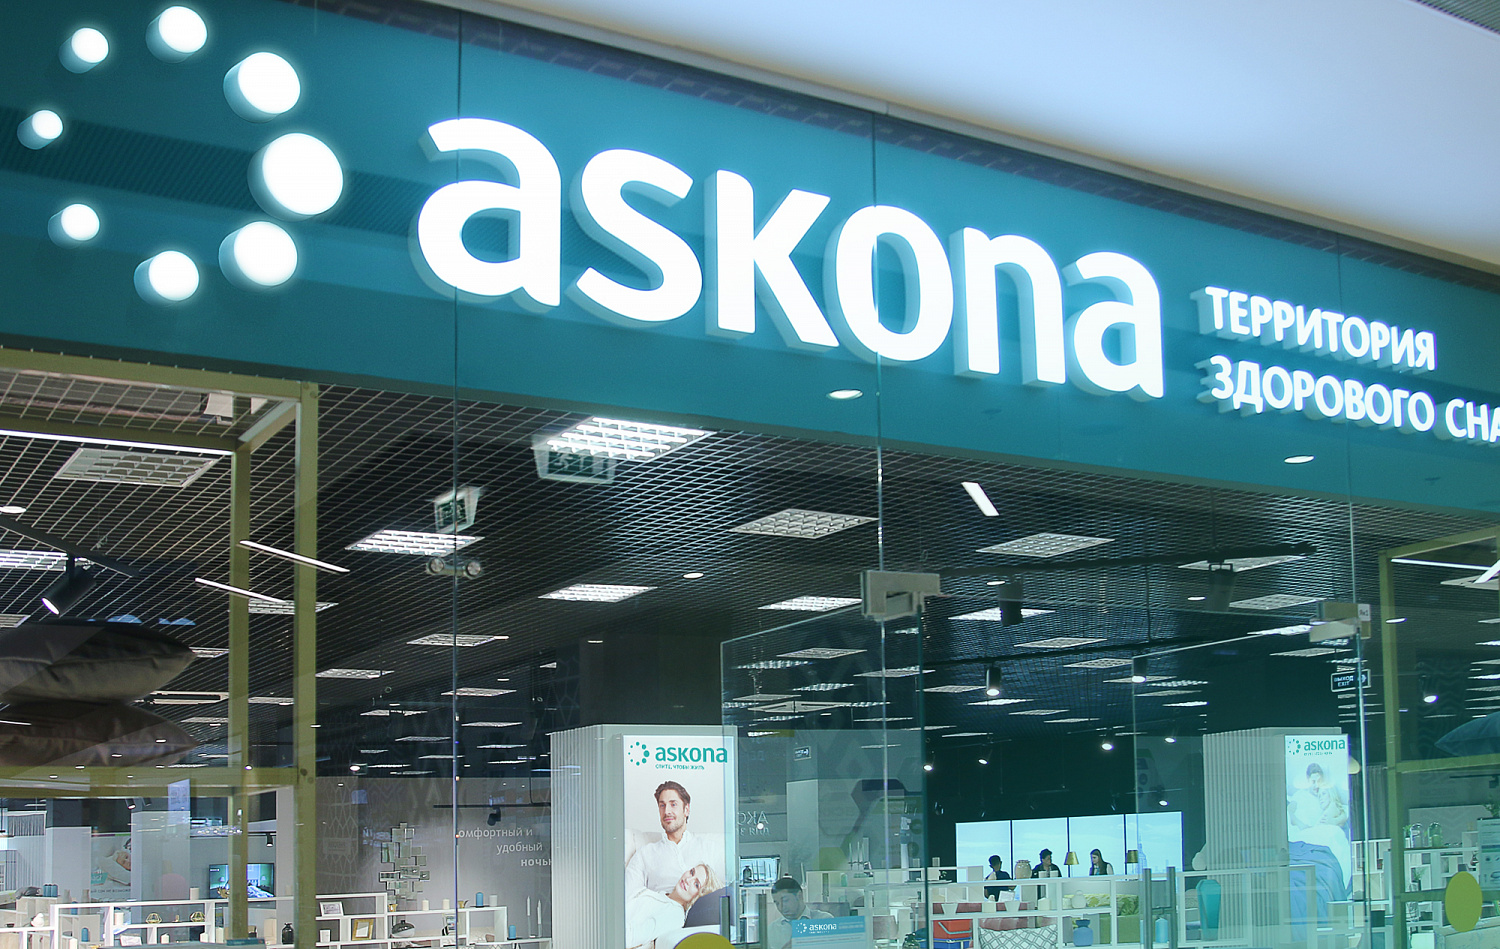 Askona - Портфолио Depot